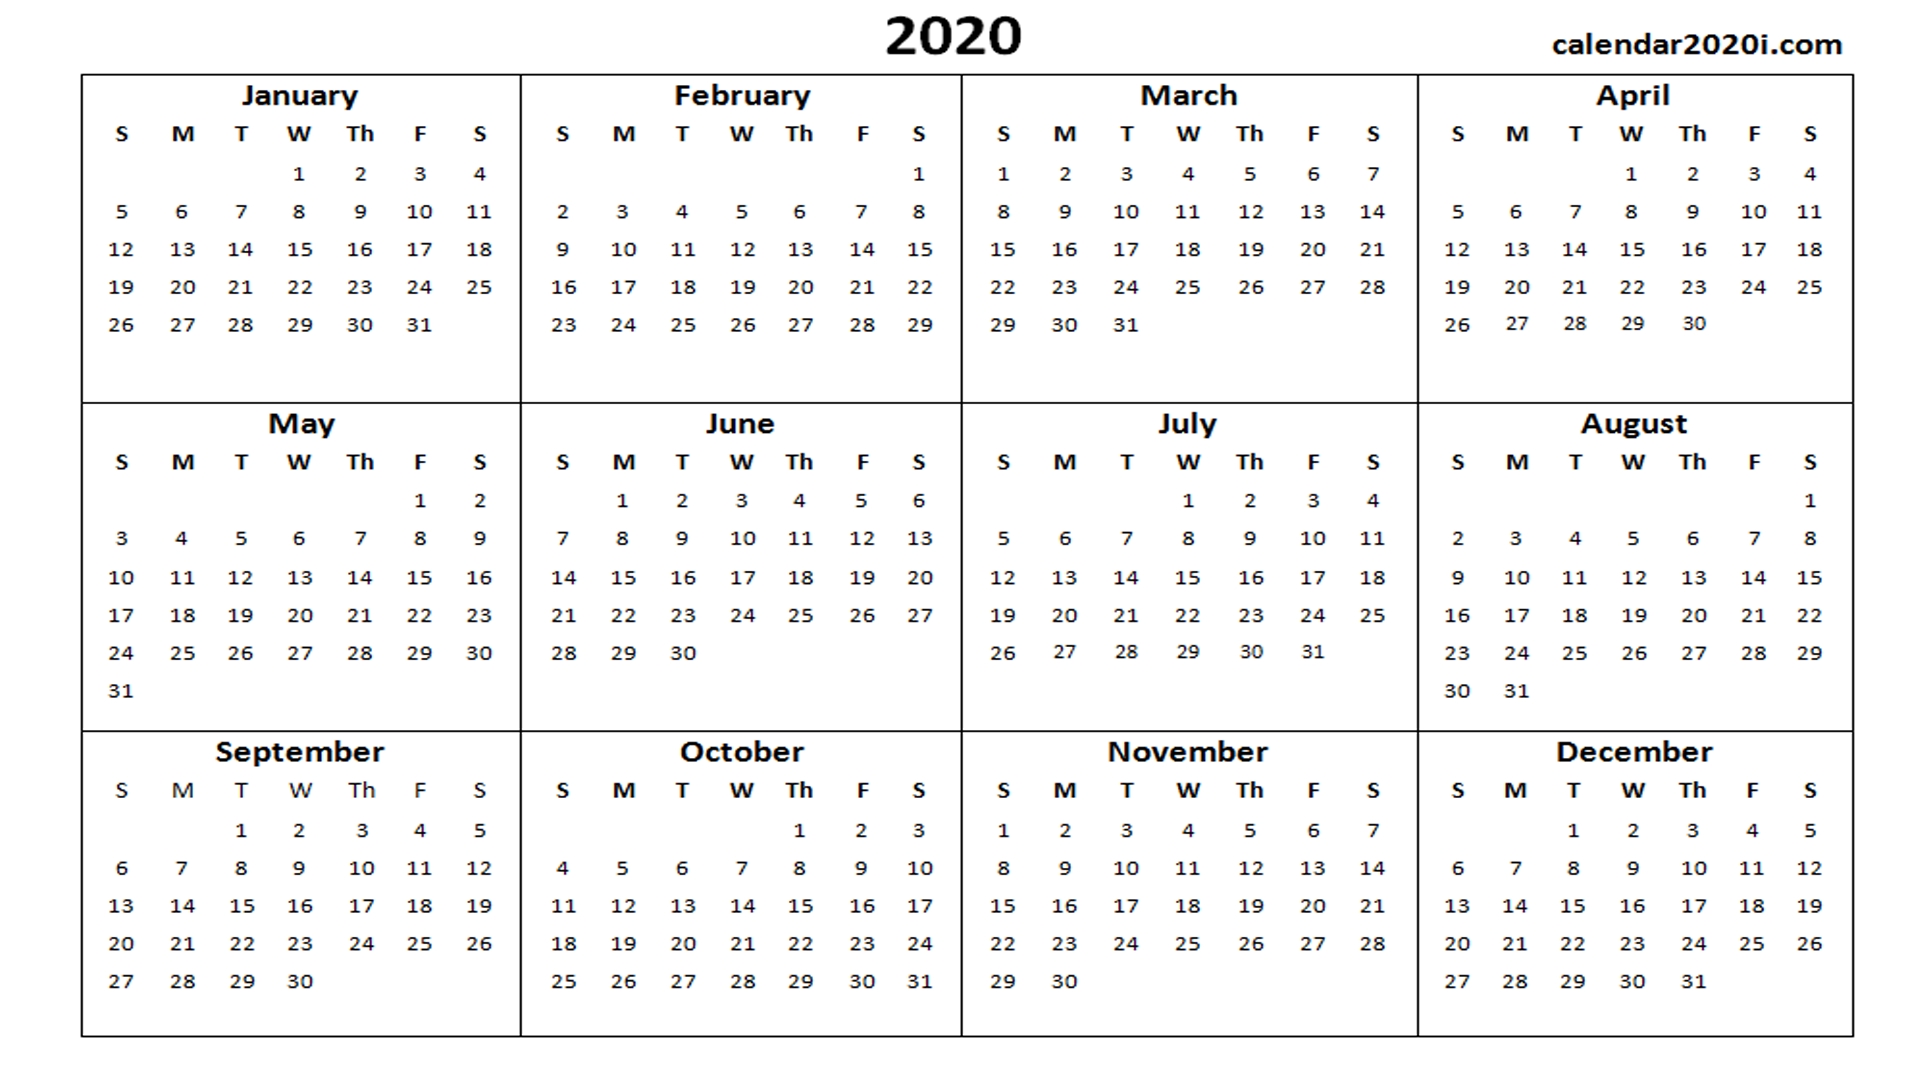 2020 Calendar Printable Template Holidays, Word, Excel, Pdf regarding Downloadable Calendar 2020 For Word